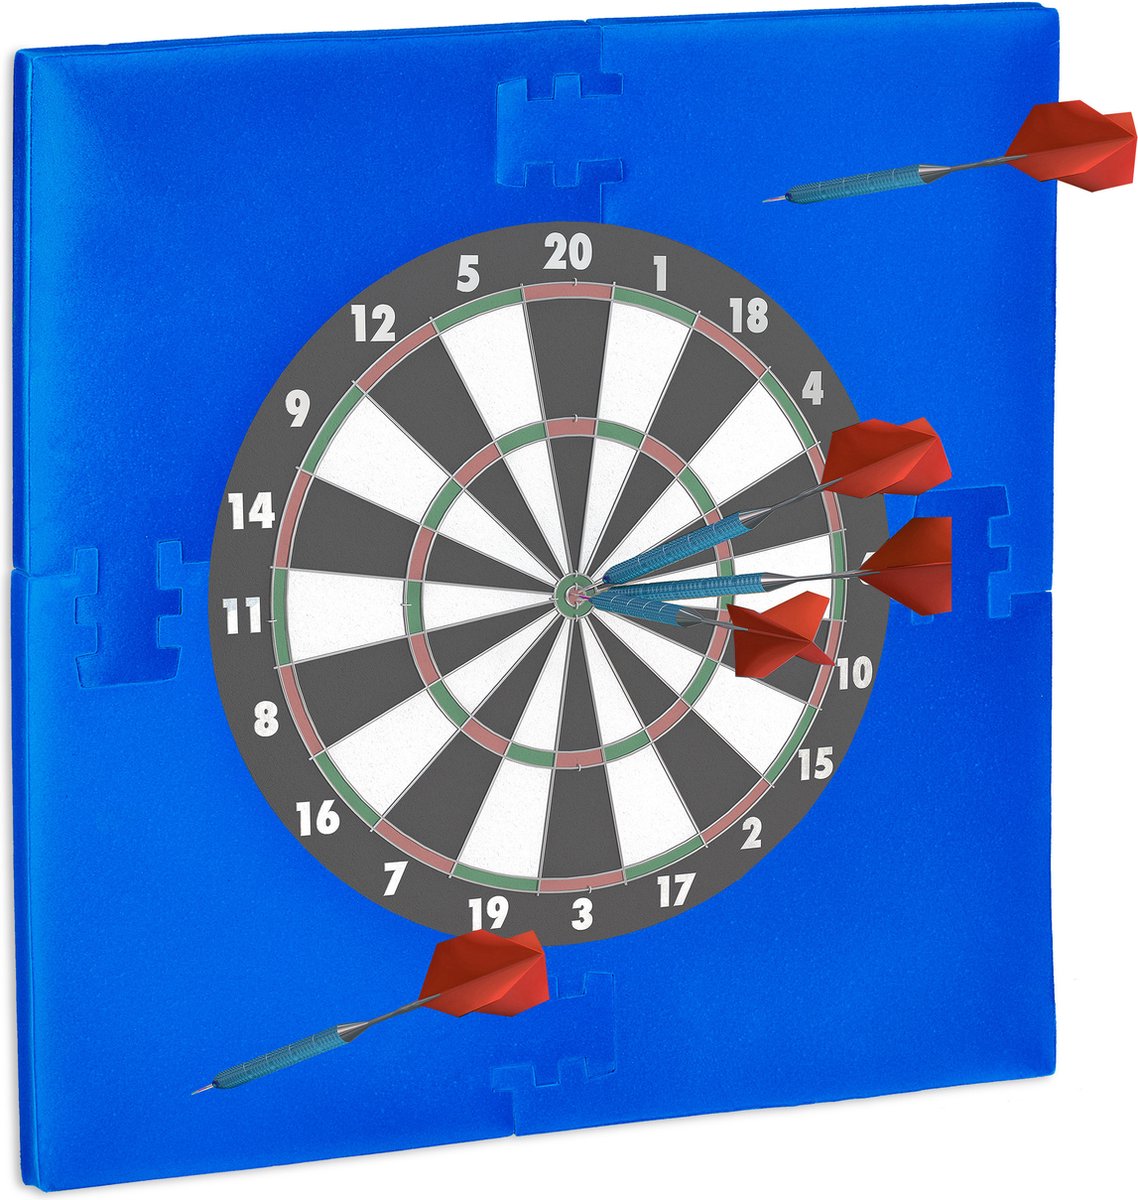 Relaxdays dartbord surround ring - beschermrand - beschermring - ring voor dartbord - 45cm - blauw